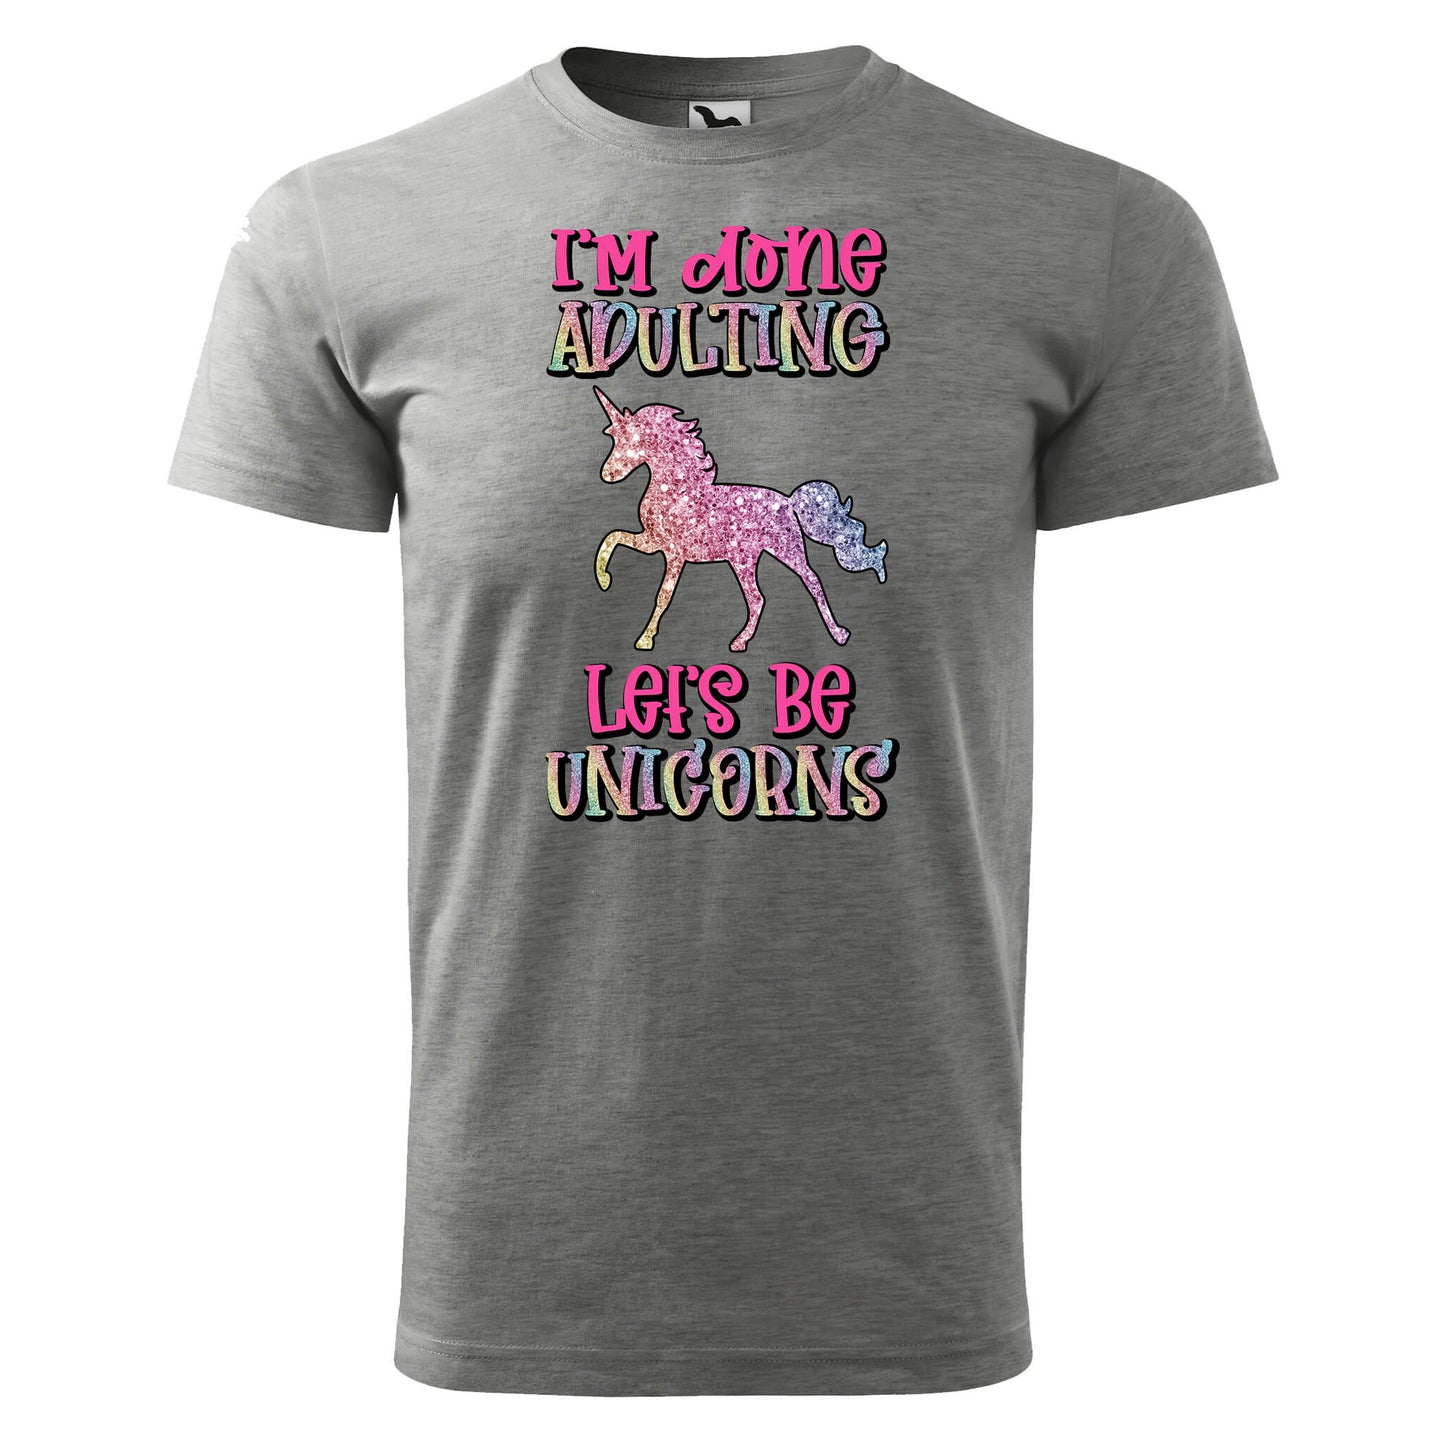 Im done adulting lets be unicorns t-shirt - rvdesignprint